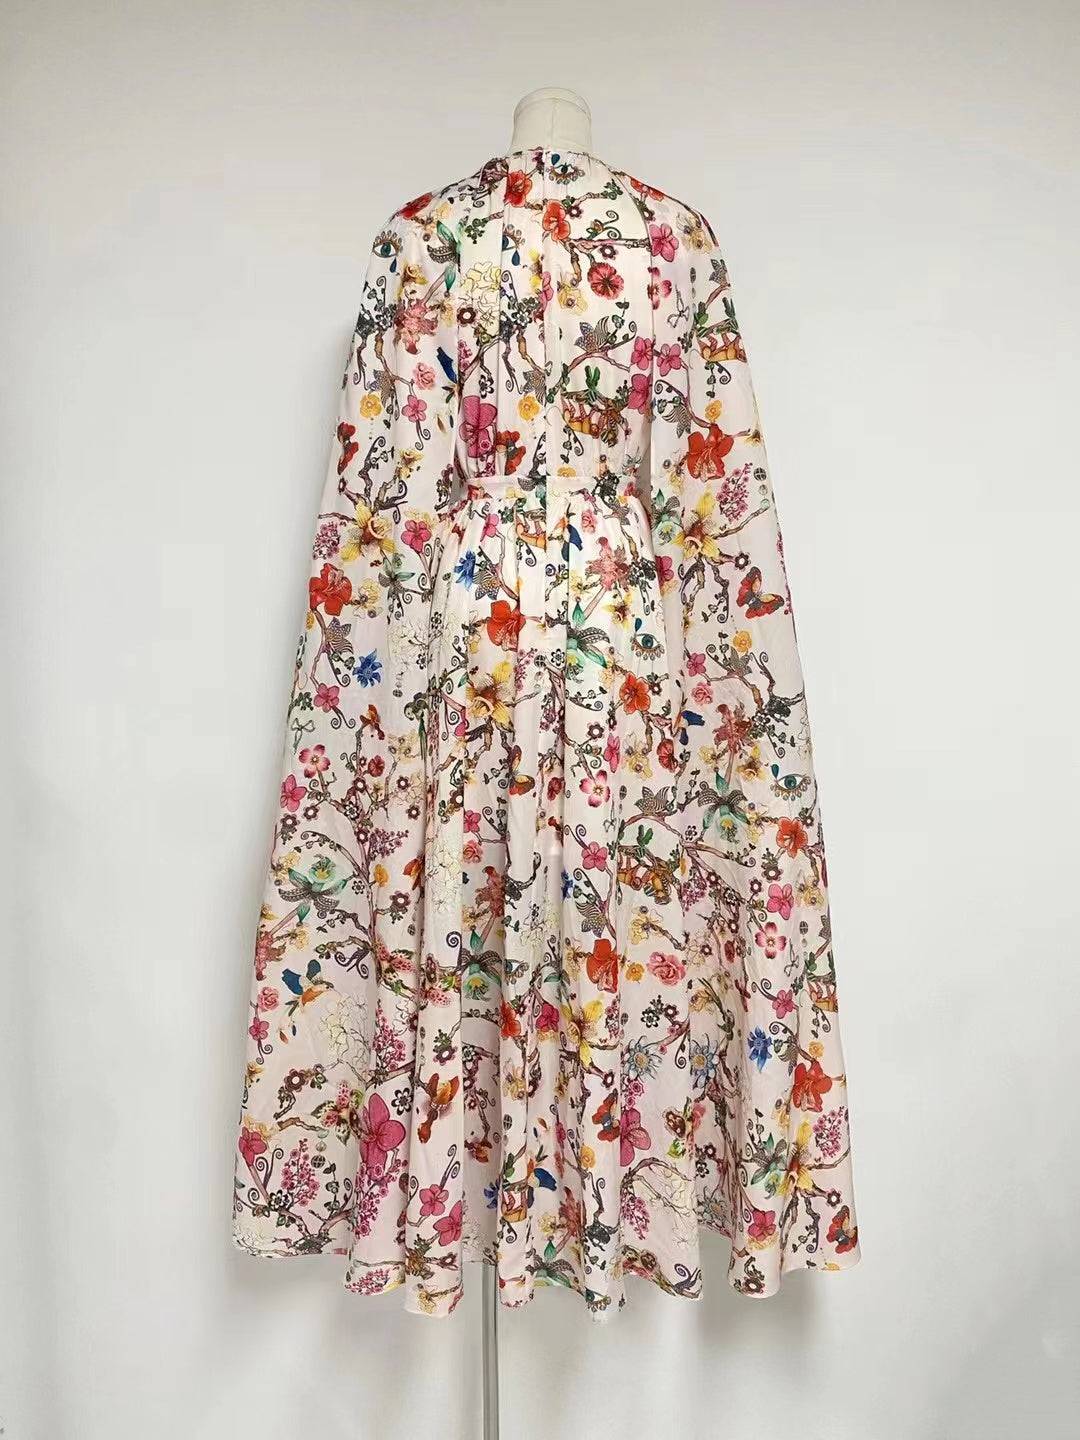 Elliana Printed Tree of Life Sequined Dress - Hot fashionista